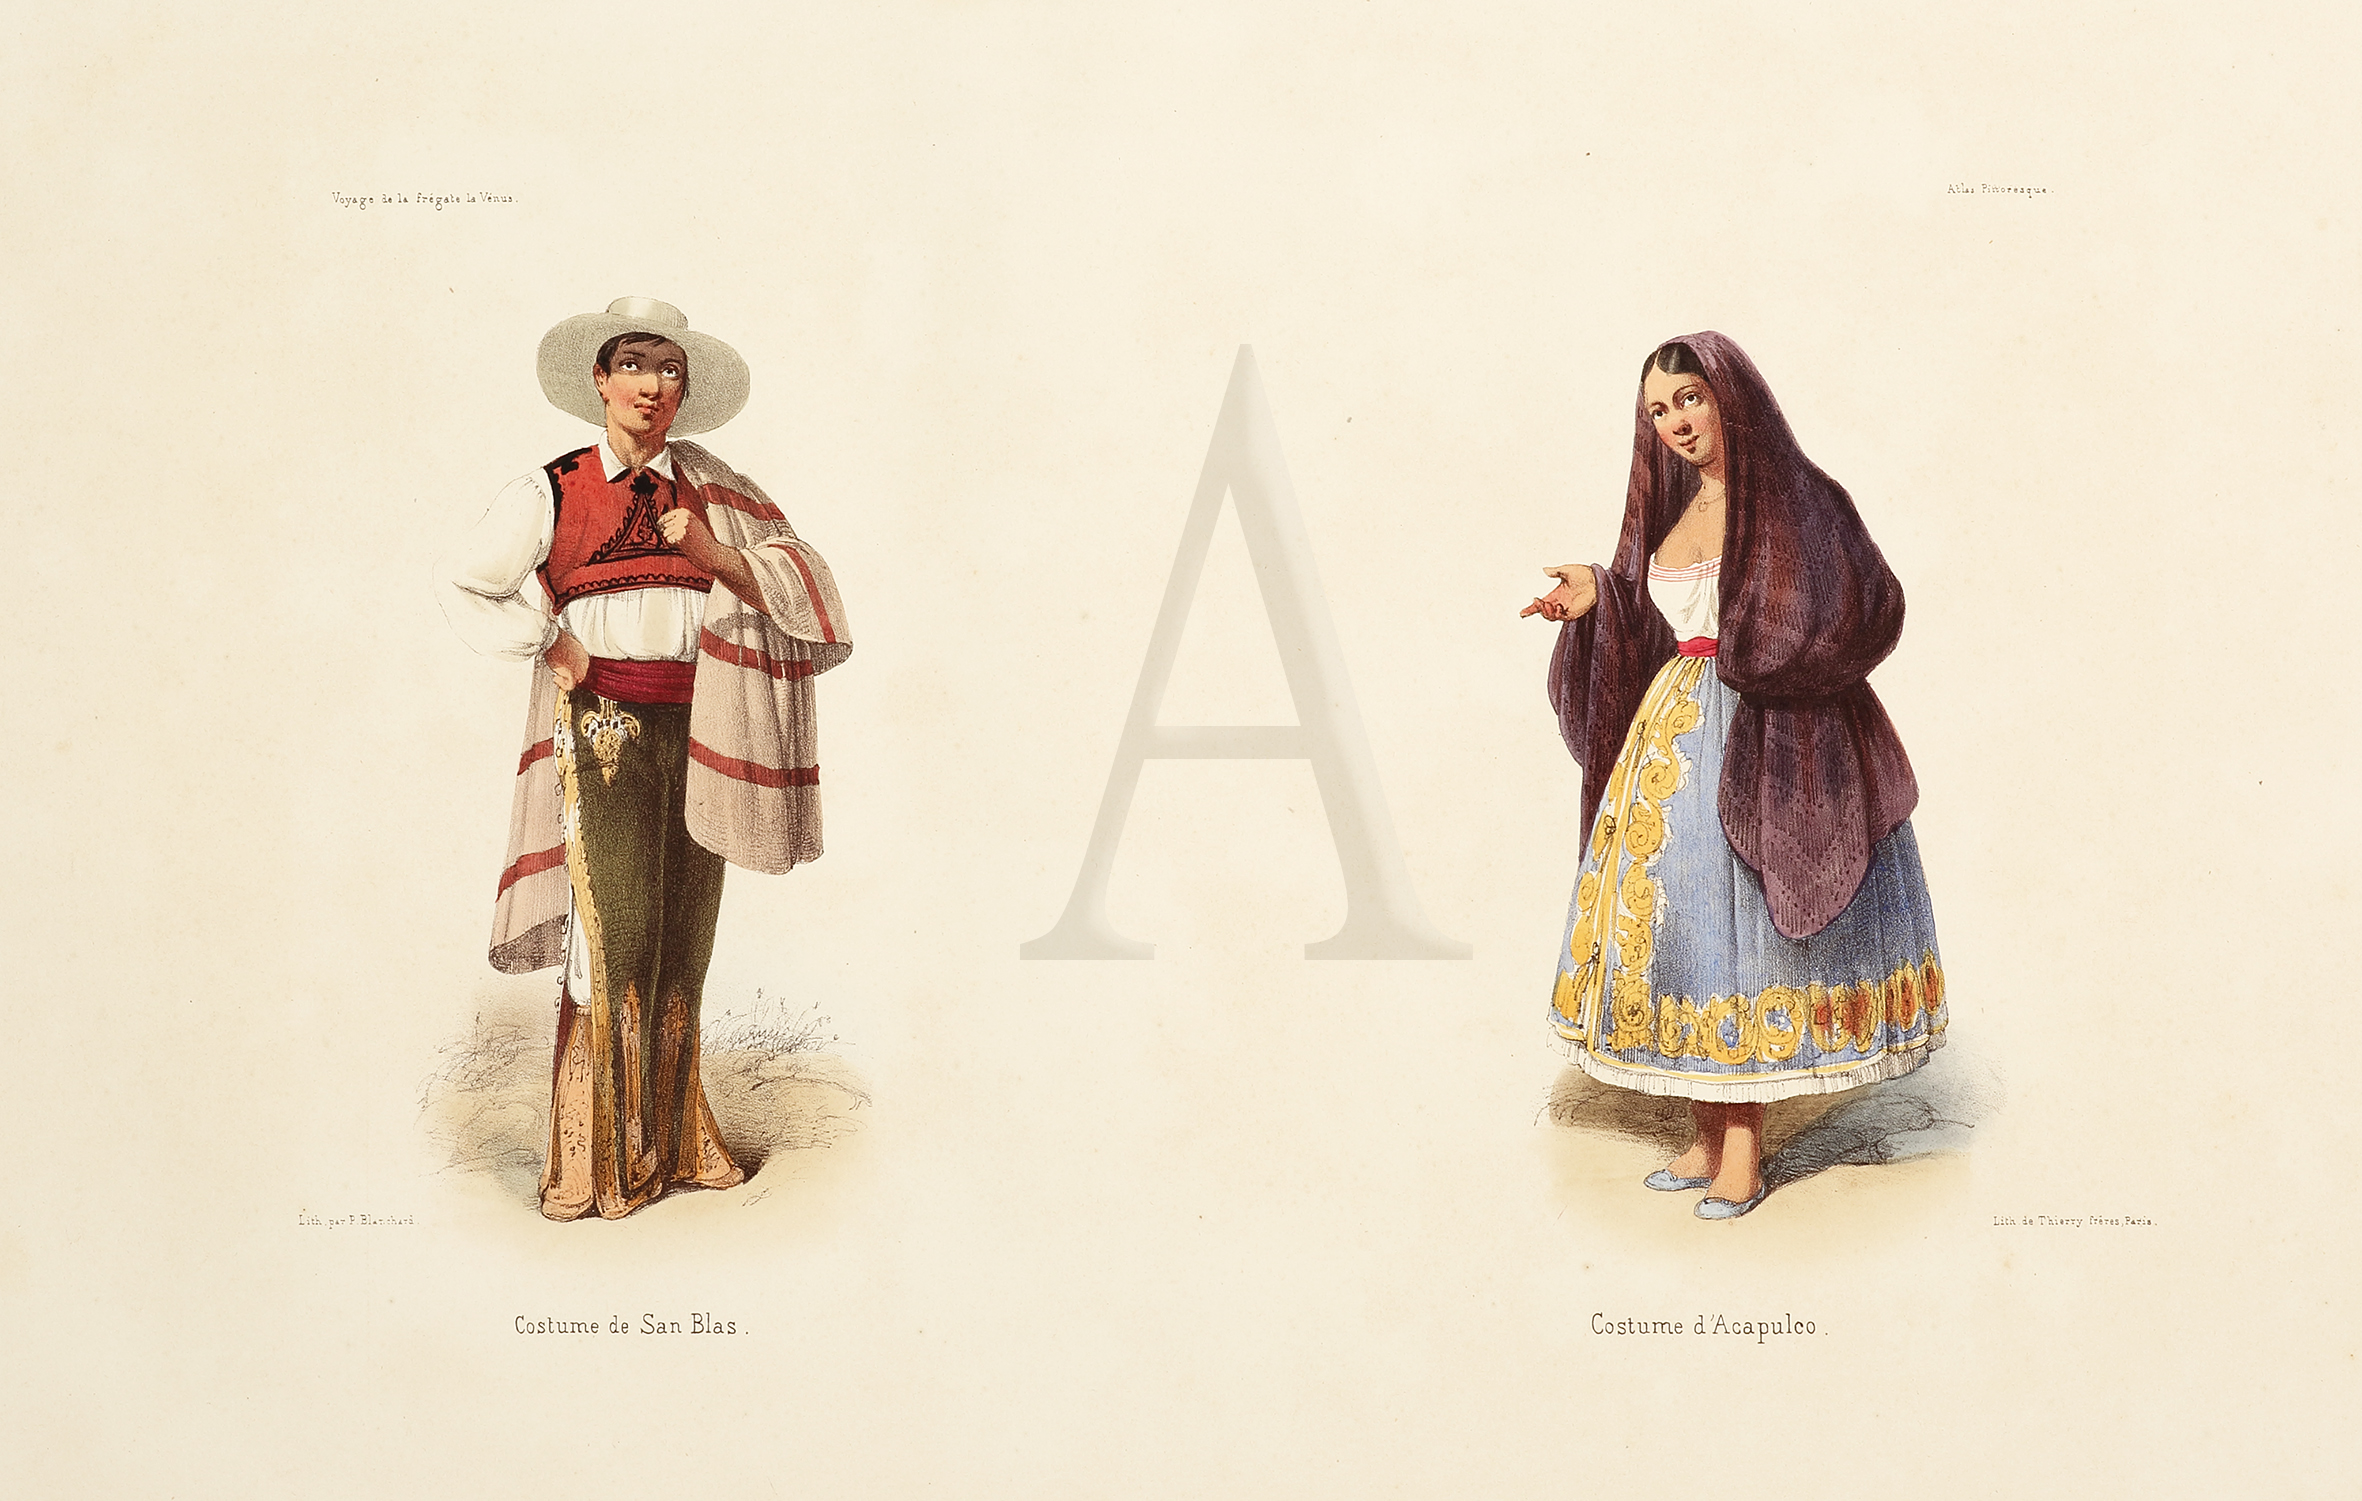 Costume de San Blas. Costume d'Acapulco. - Antique Print from 1841